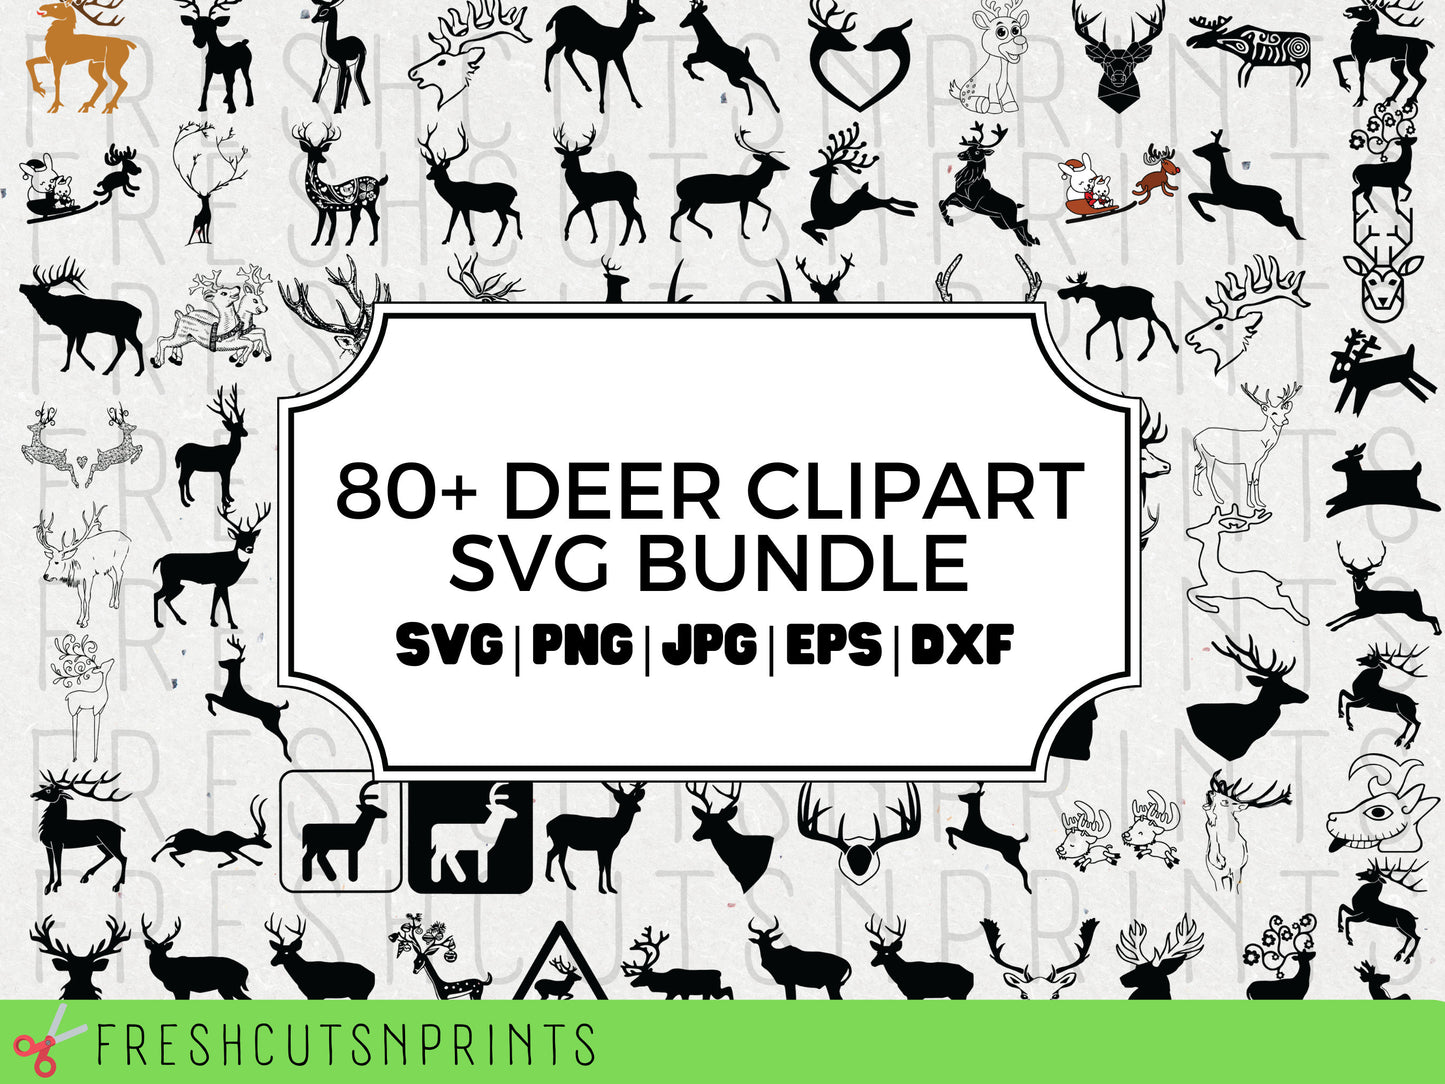 80+ Deer and Reindeer SVG Clipart Bundle , Deer Clipart, Deer Silhouette, Cute Deer SVG, Reindeer SVG, Deer Cut File, Commercial Use